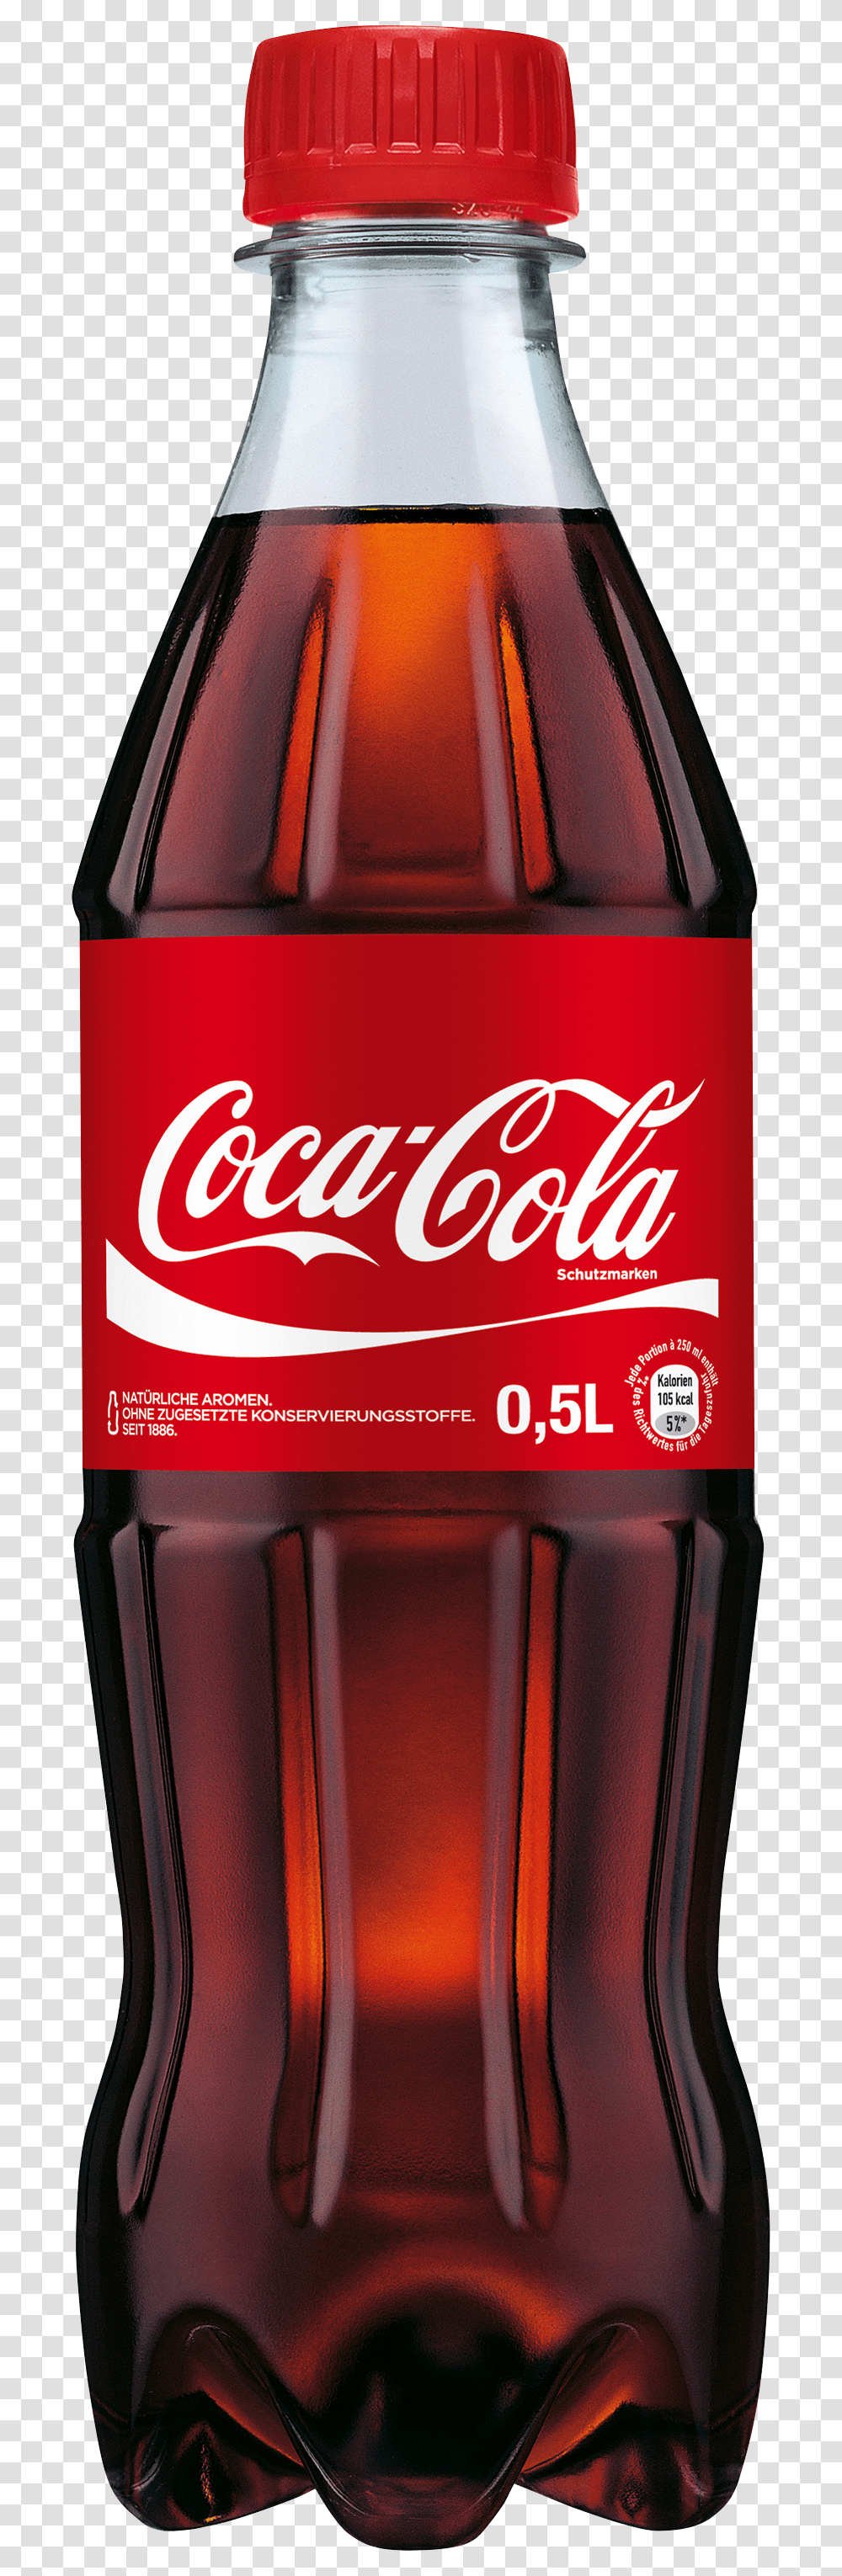 Coke Zero Coca Cola 0 5 Pet, Beverage, Drink, Soda, Bottle Transparent Png